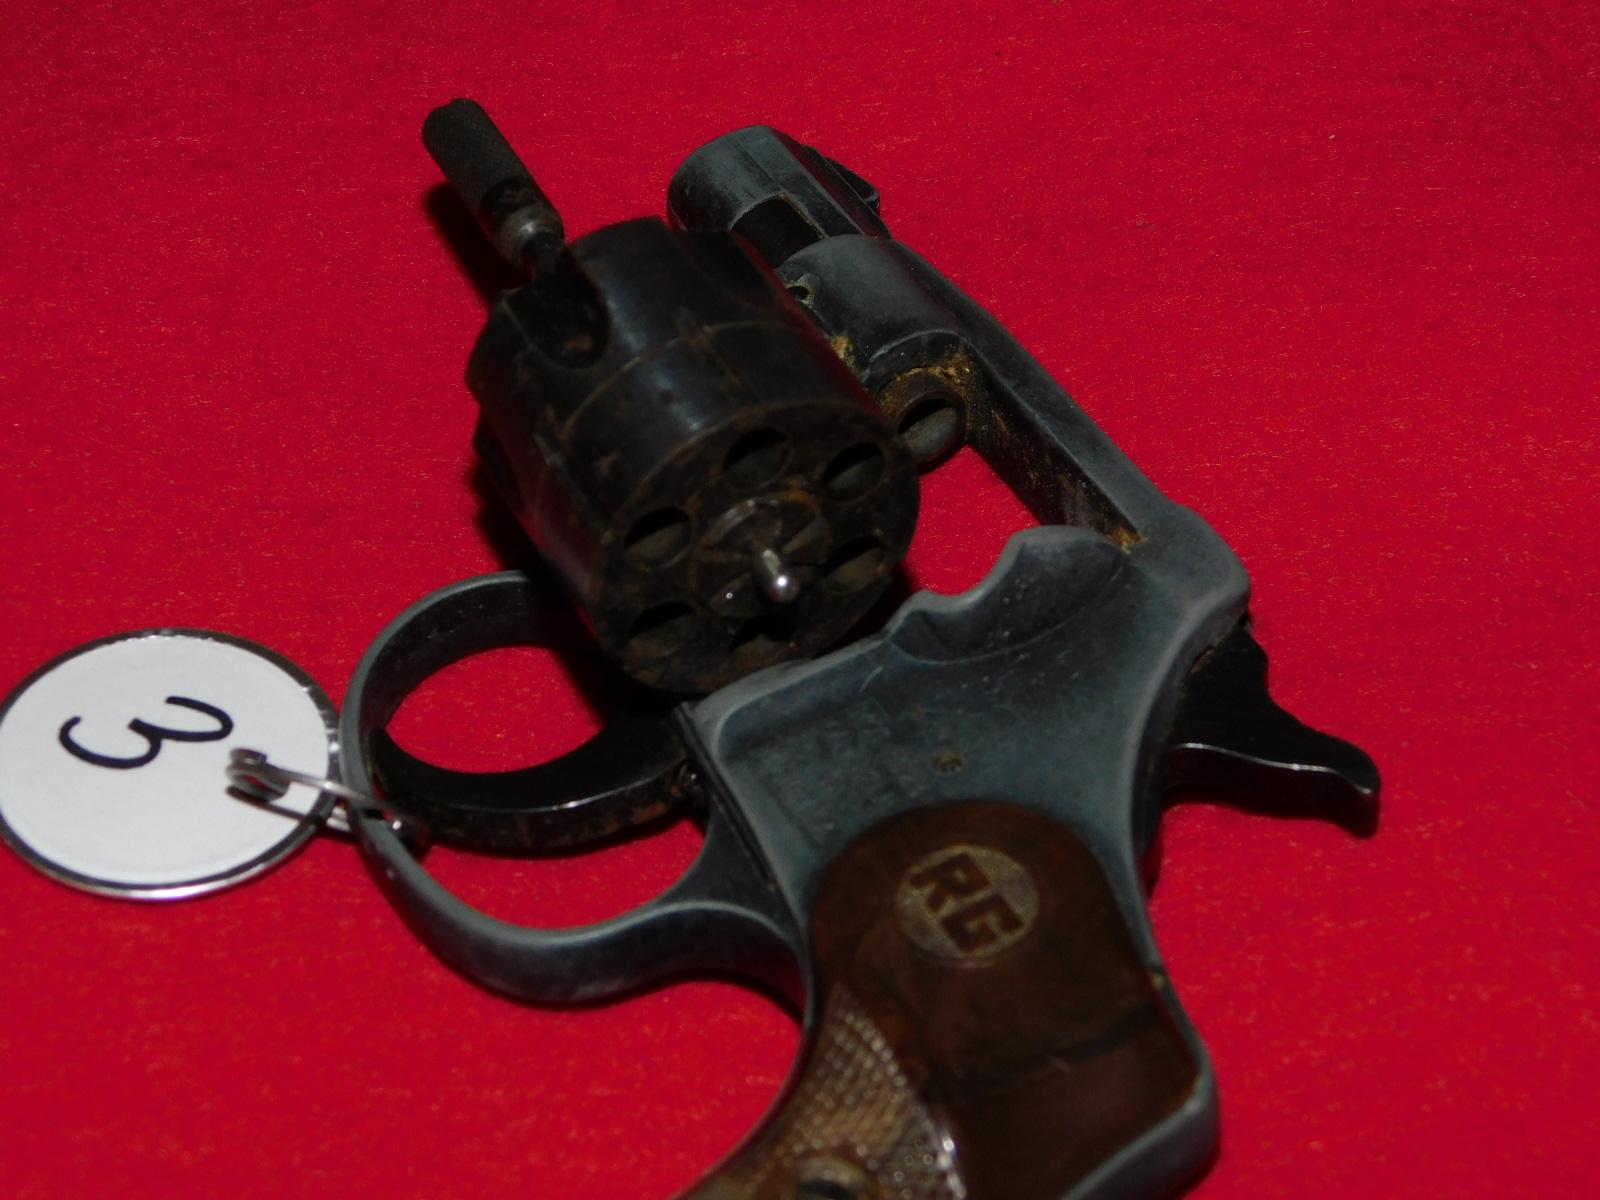 Rohm RG23 .22LR Revolver